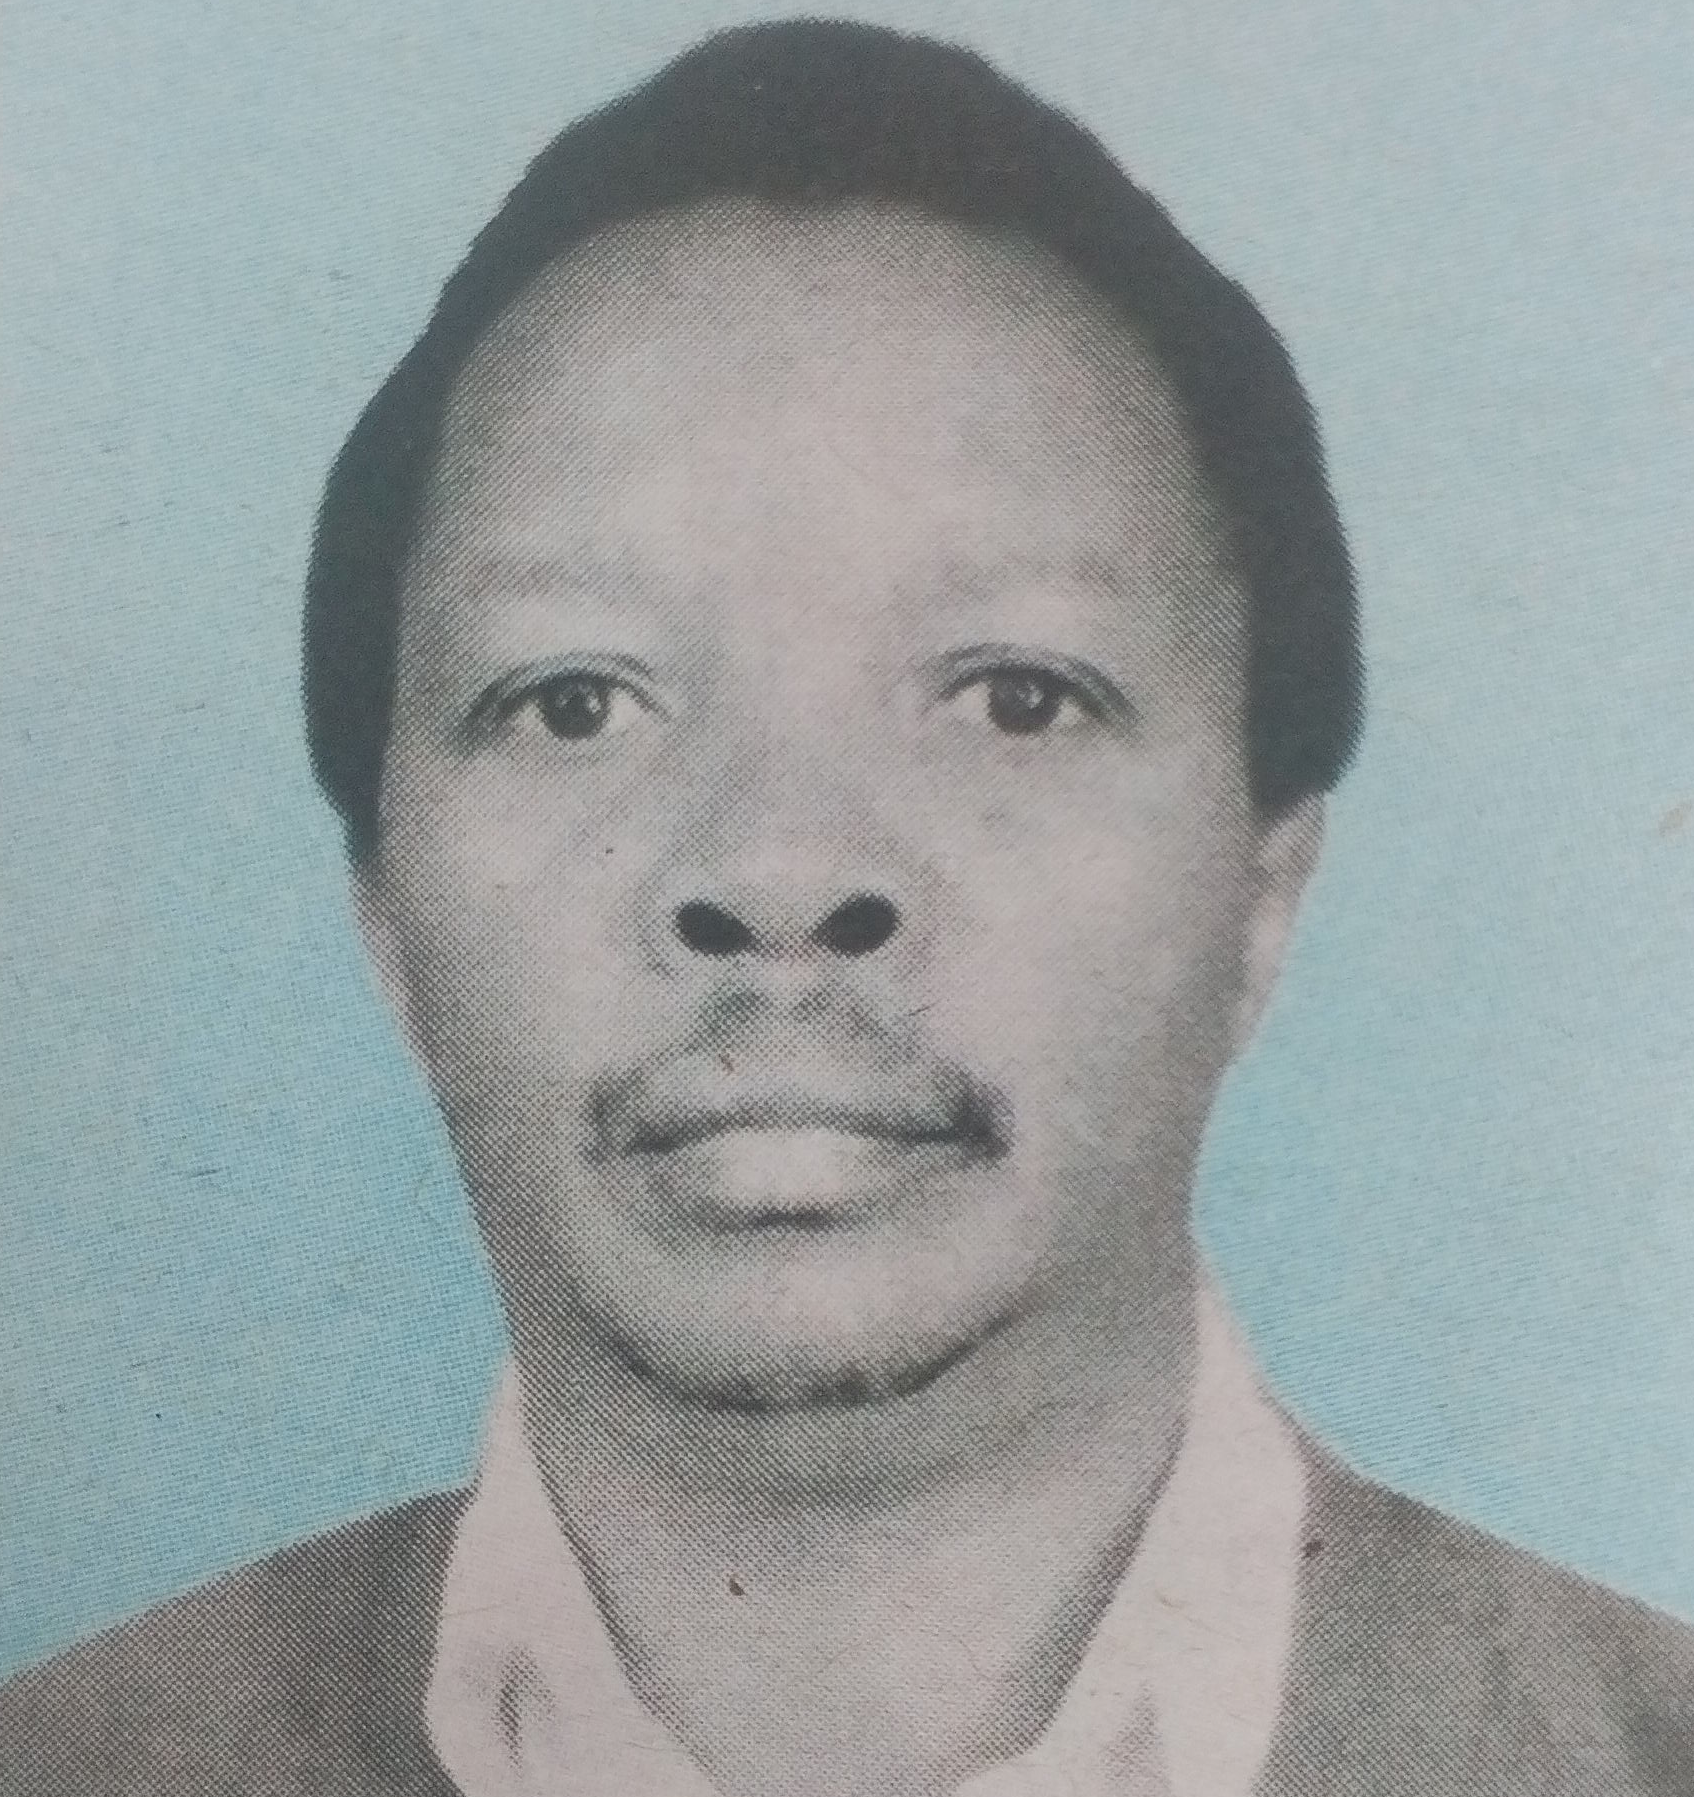 Obituary Image of Geoffrey Kamau Kariuki (GK)